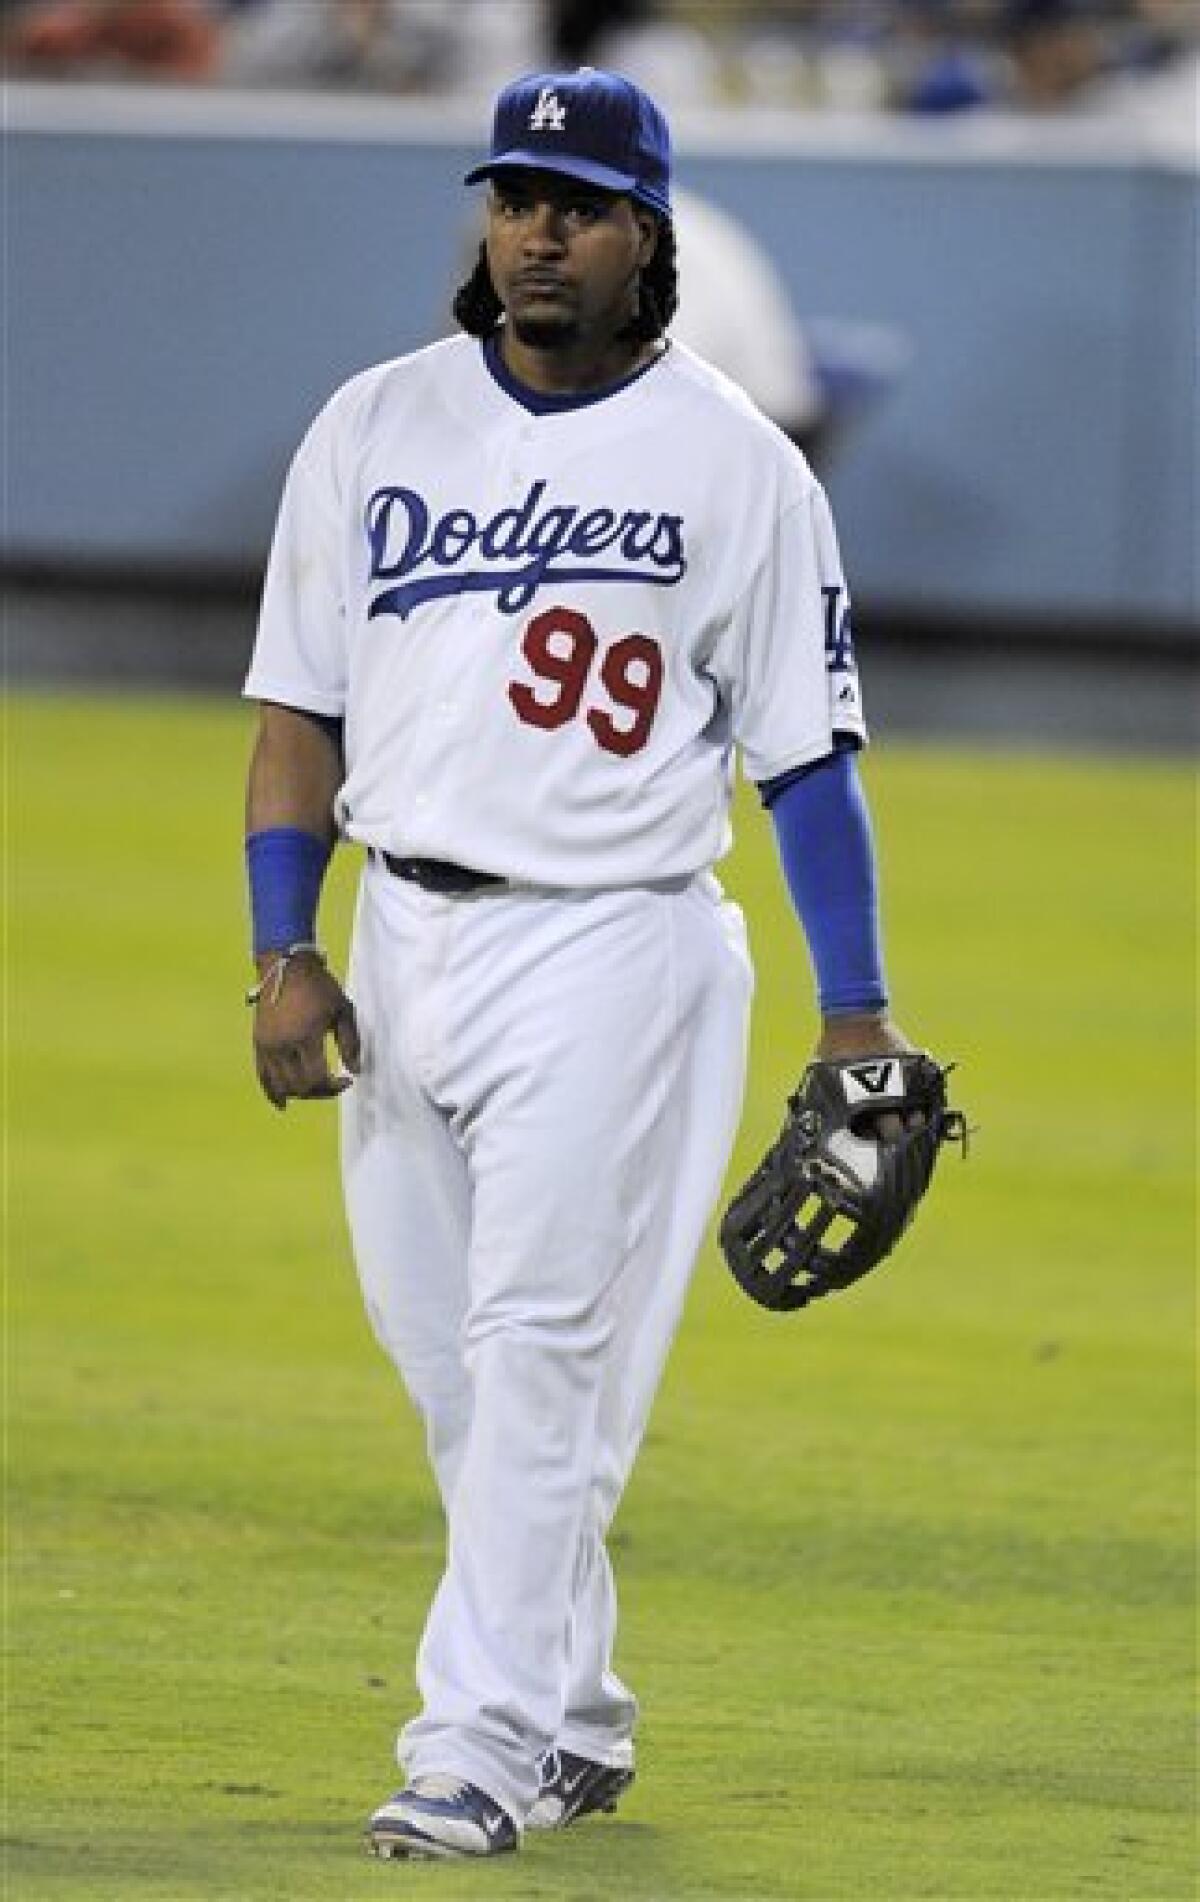 Dodgers play waiting game with Ramirez - The San Diego Union-Tribune